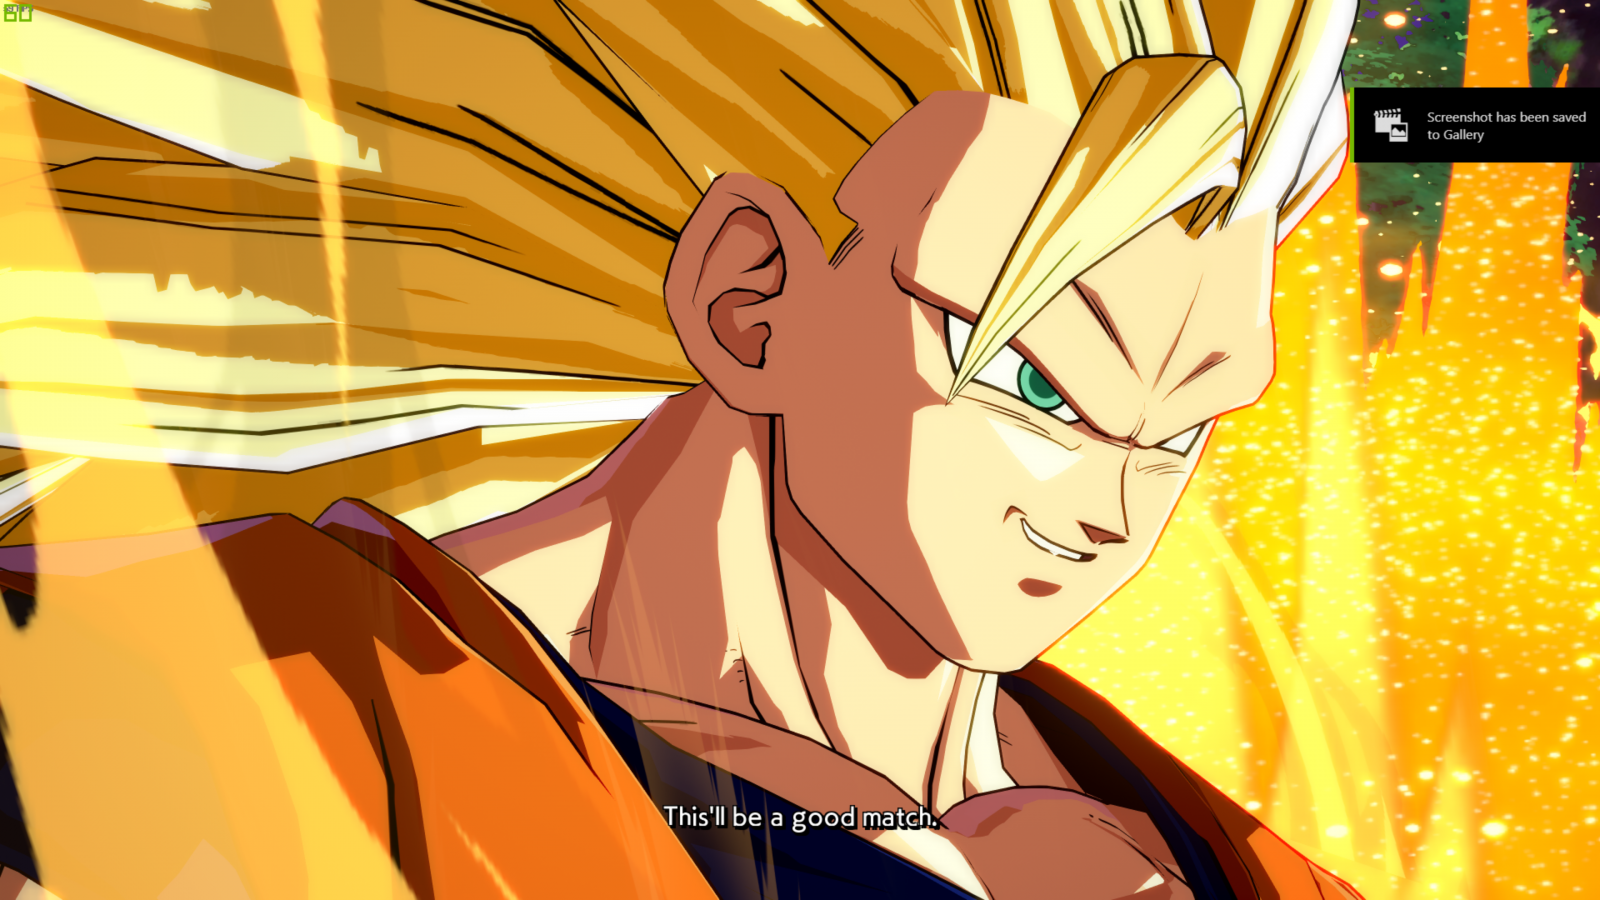 Goku super saiyan 3